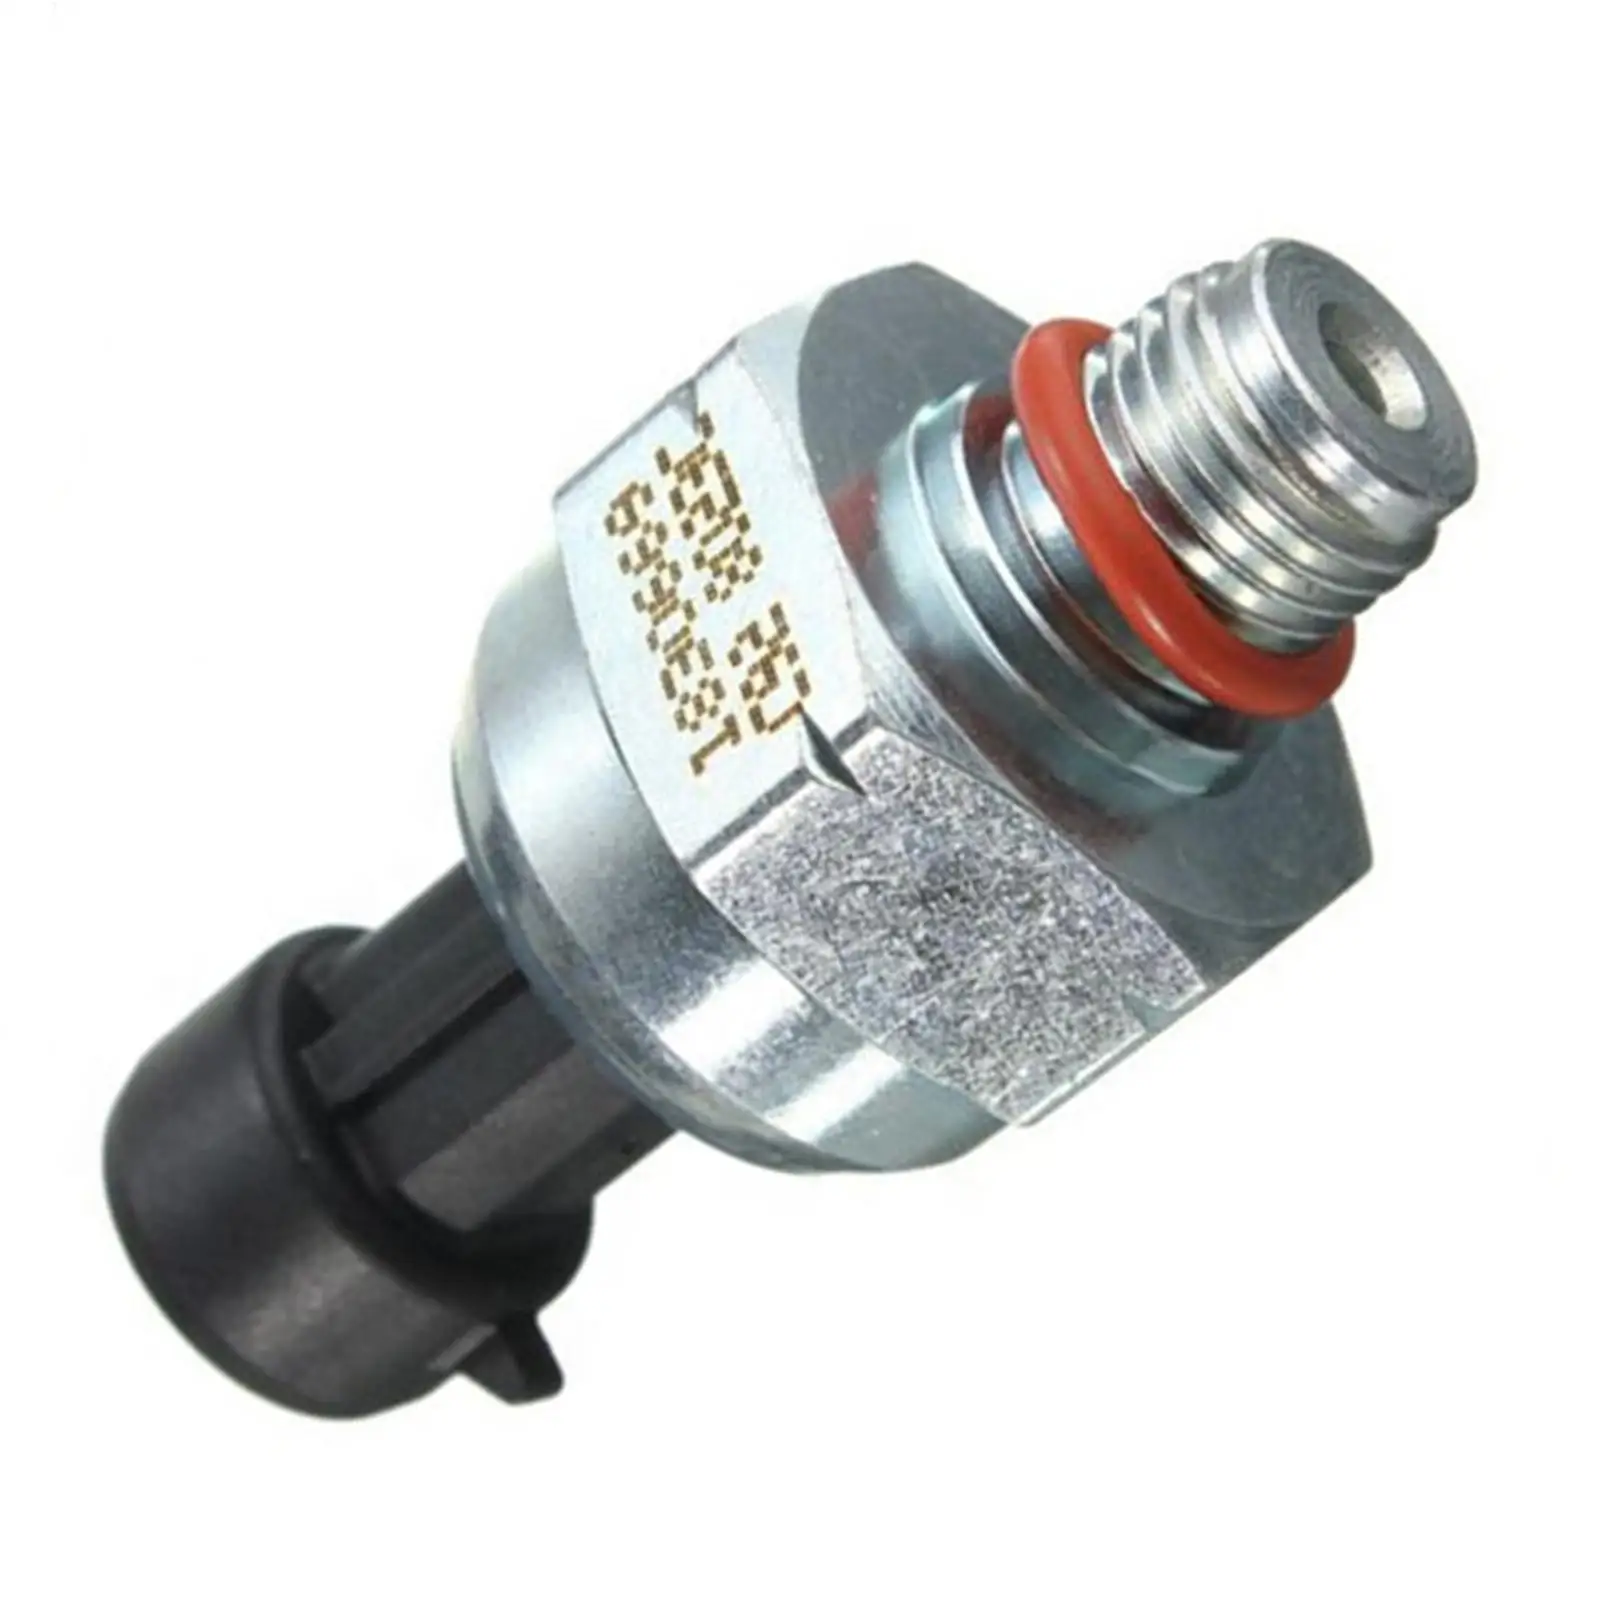 Sensor for Navistar/International DT466E DT466 Part #s AP63465 ICP 1830669C92 Injection Control Pressure I530E